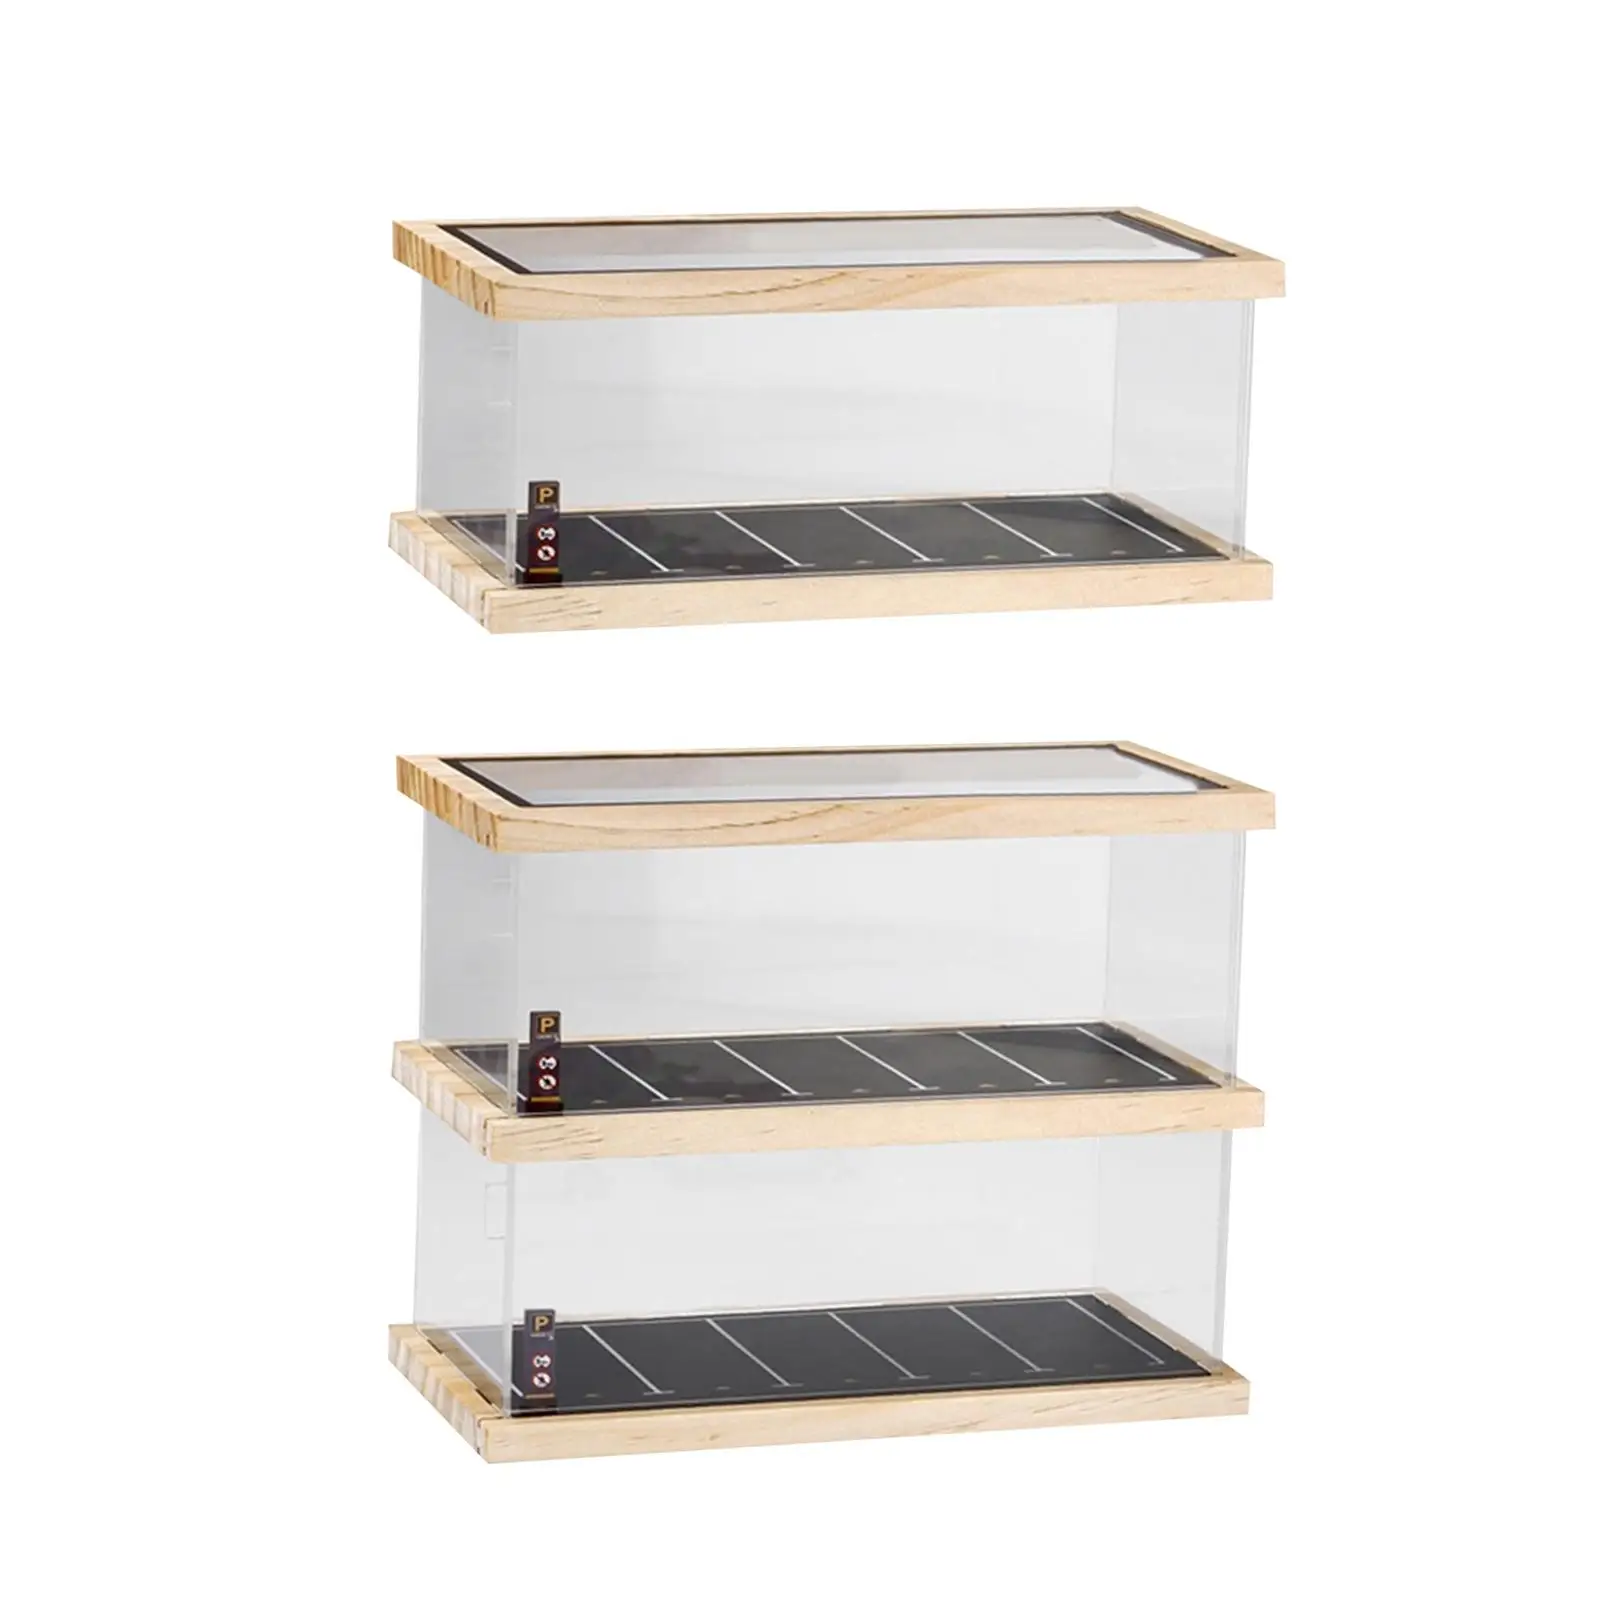 1/64 Display Case Storage Organizer Multipurpose for Living Room Bookshelf